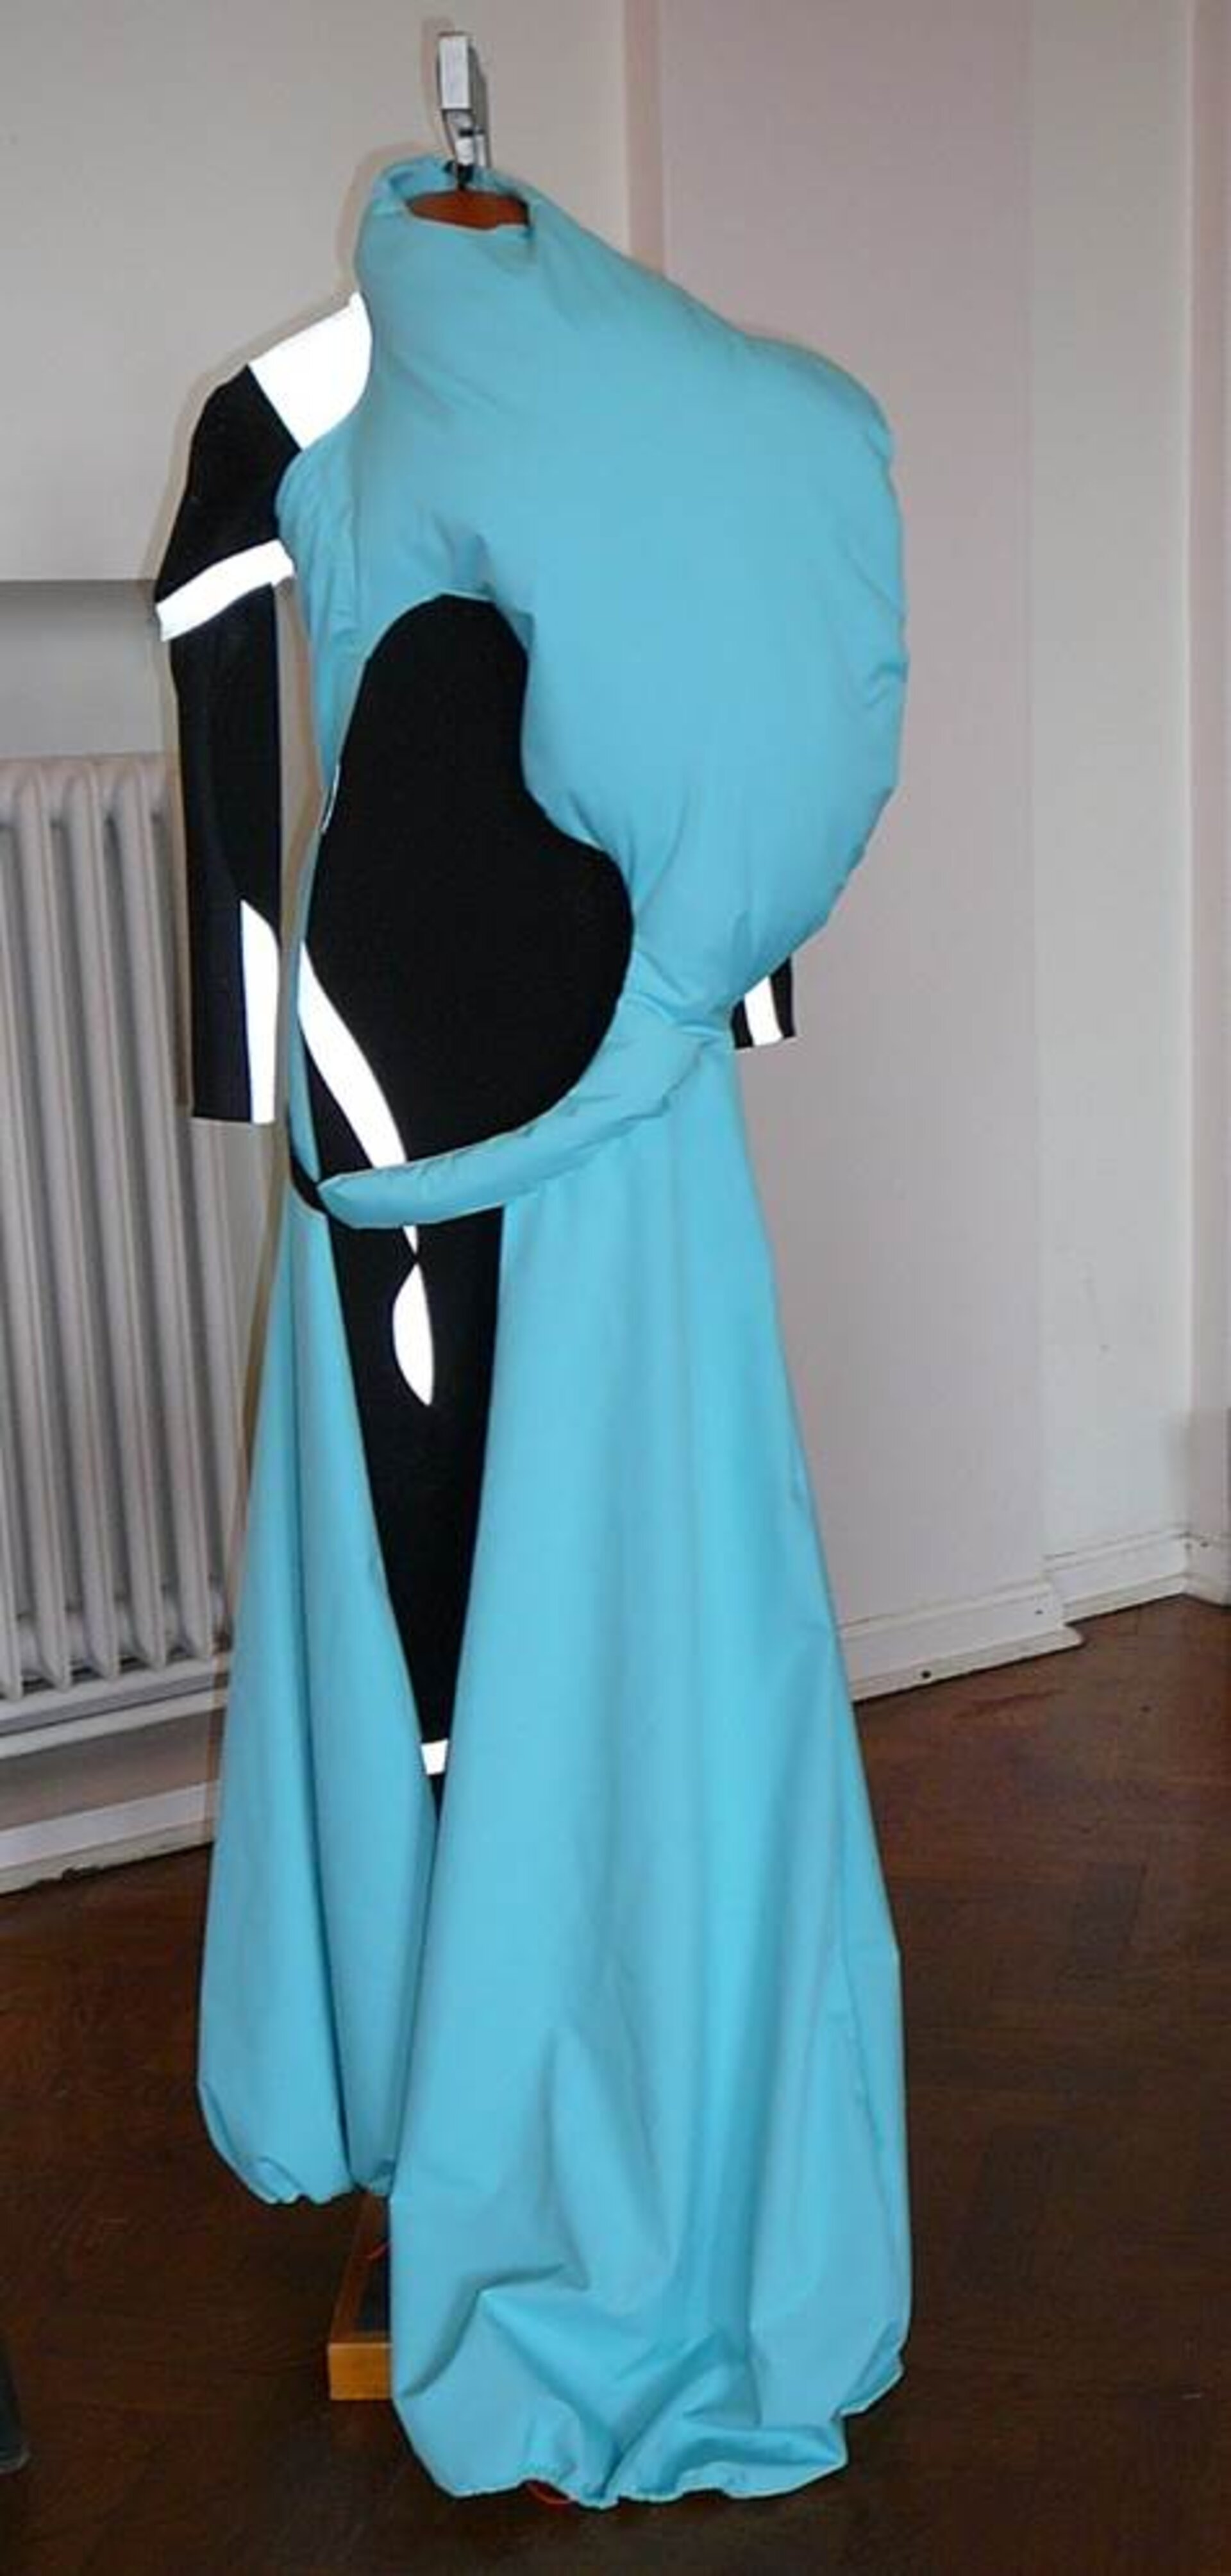 Garment designed by Sarah Grepl, student at ESMOD Berlin